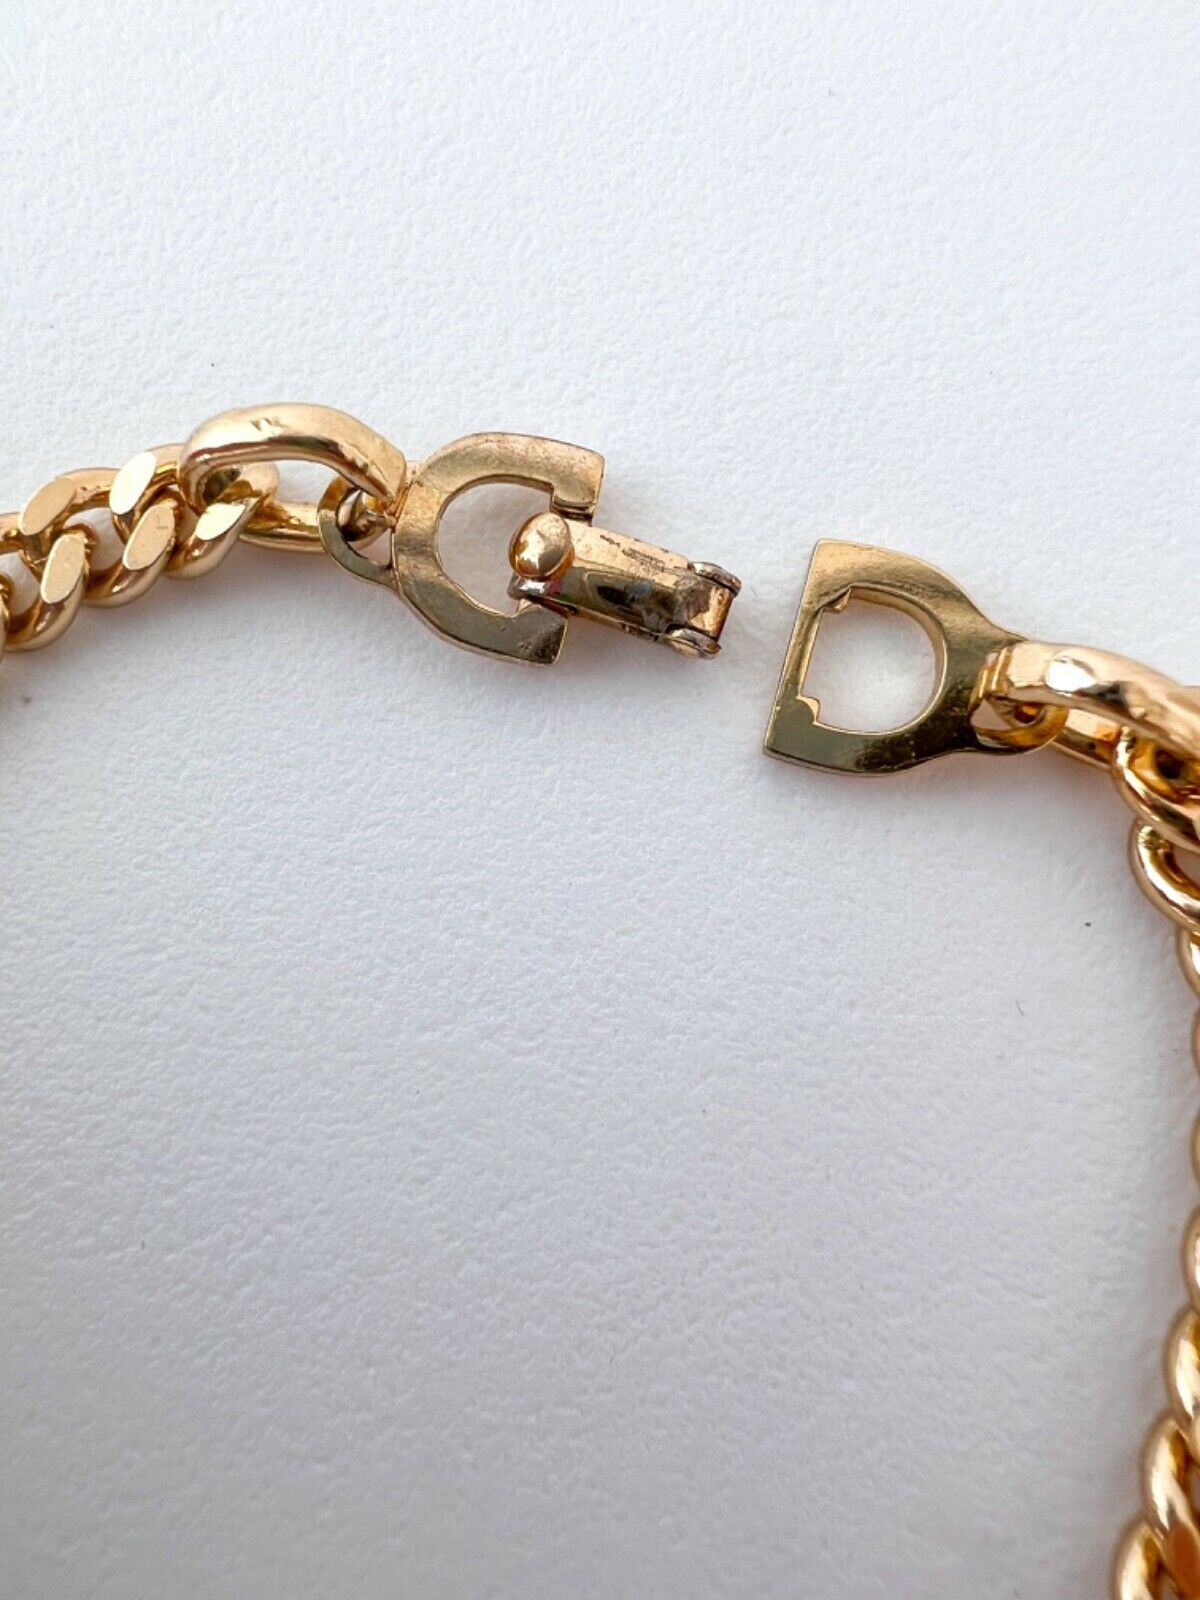 Christian Dior Gold Tone Vintage Chain Charm Bracelet CD Logo Rhinestones